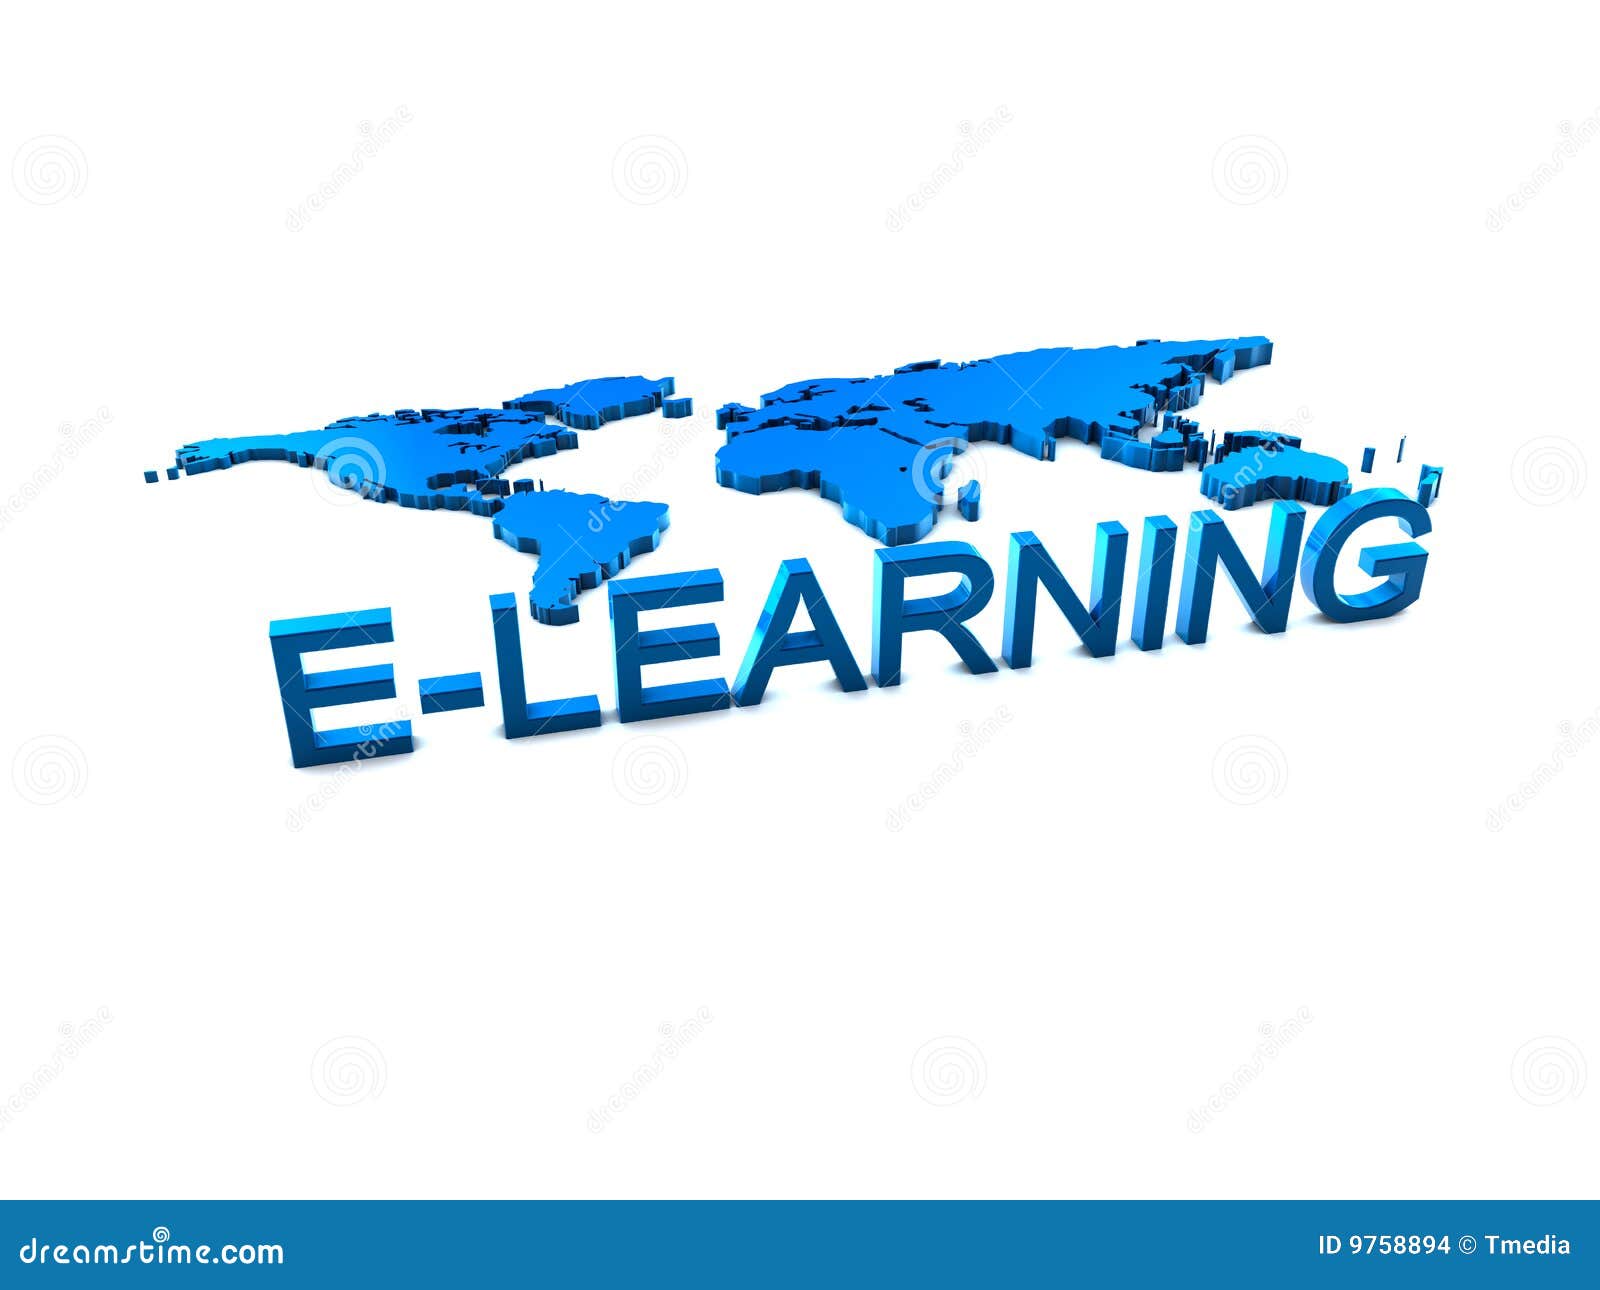 elearning logo for education